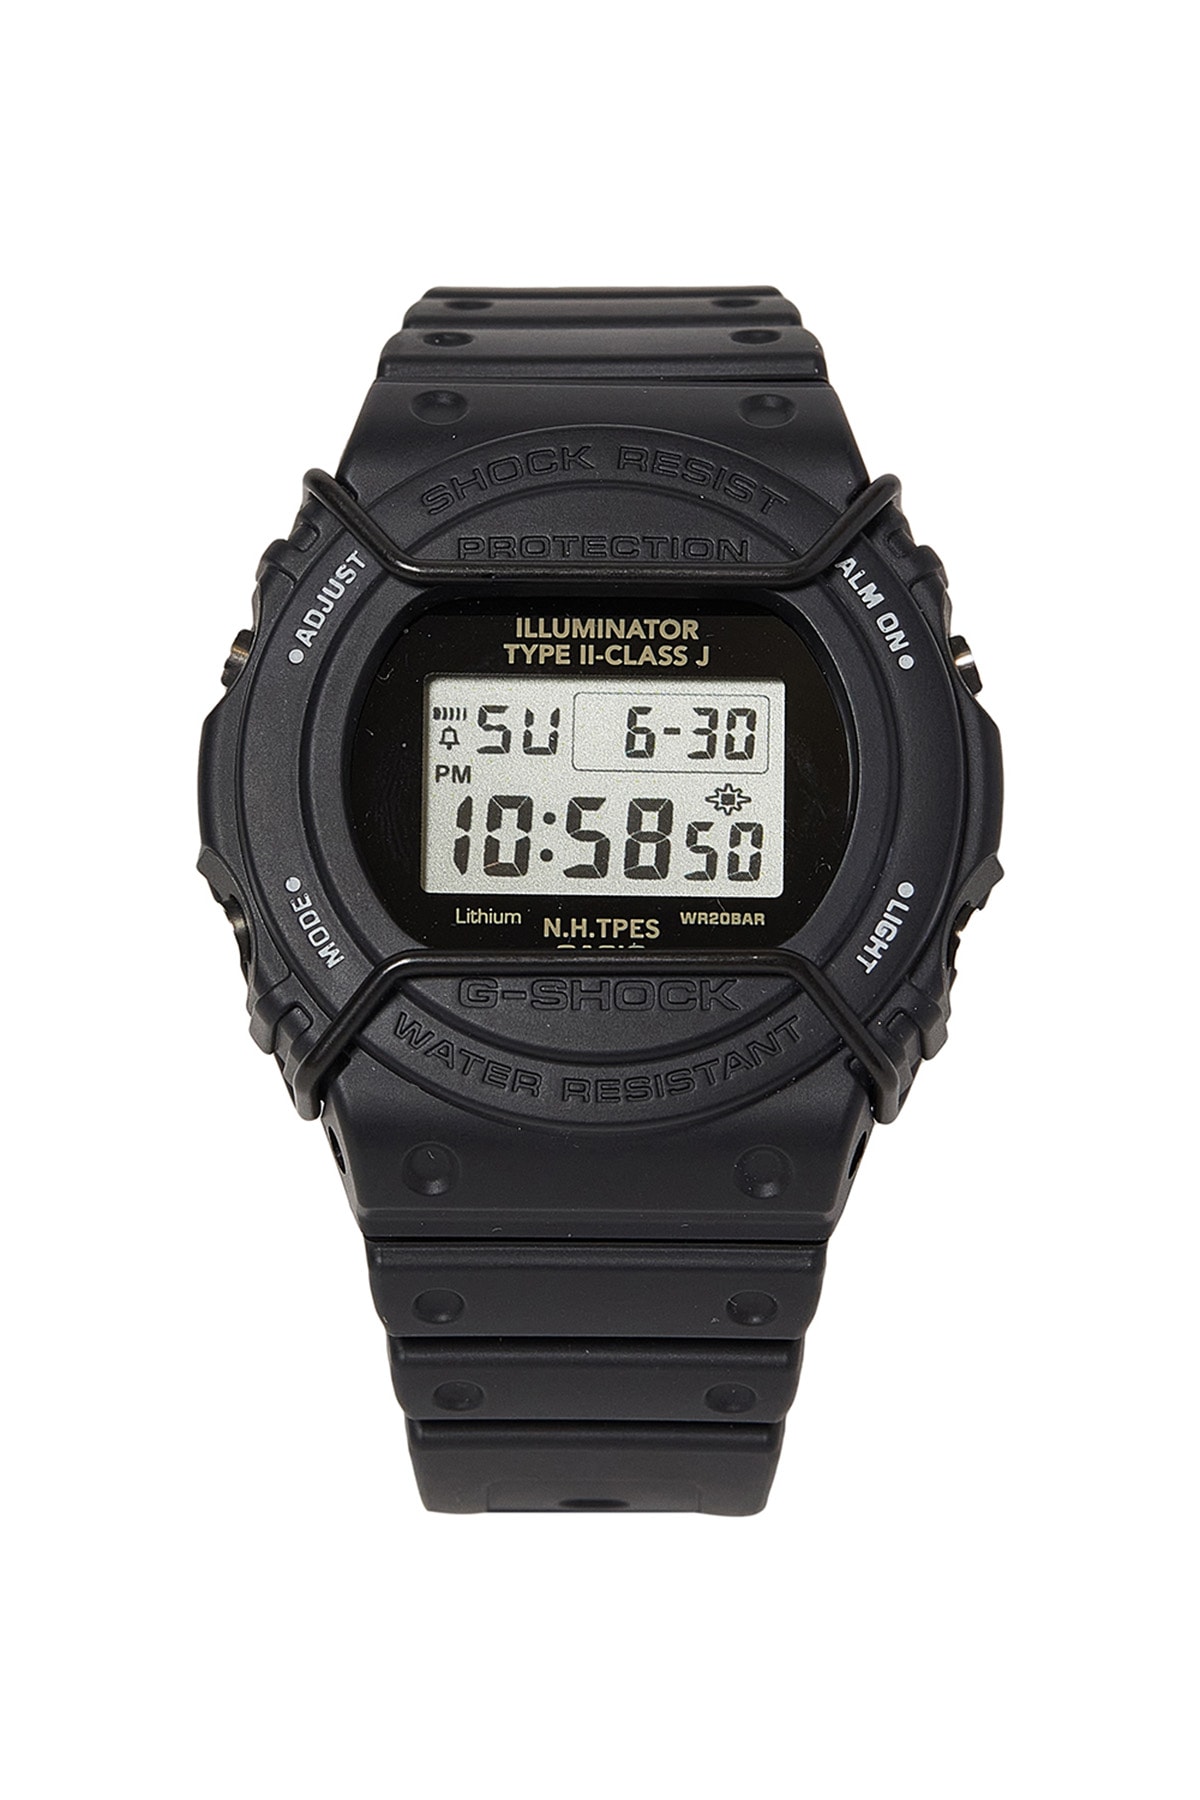 N.HOOLYWOOD x G-Shock DW-5700 最新聯名錶款發佈